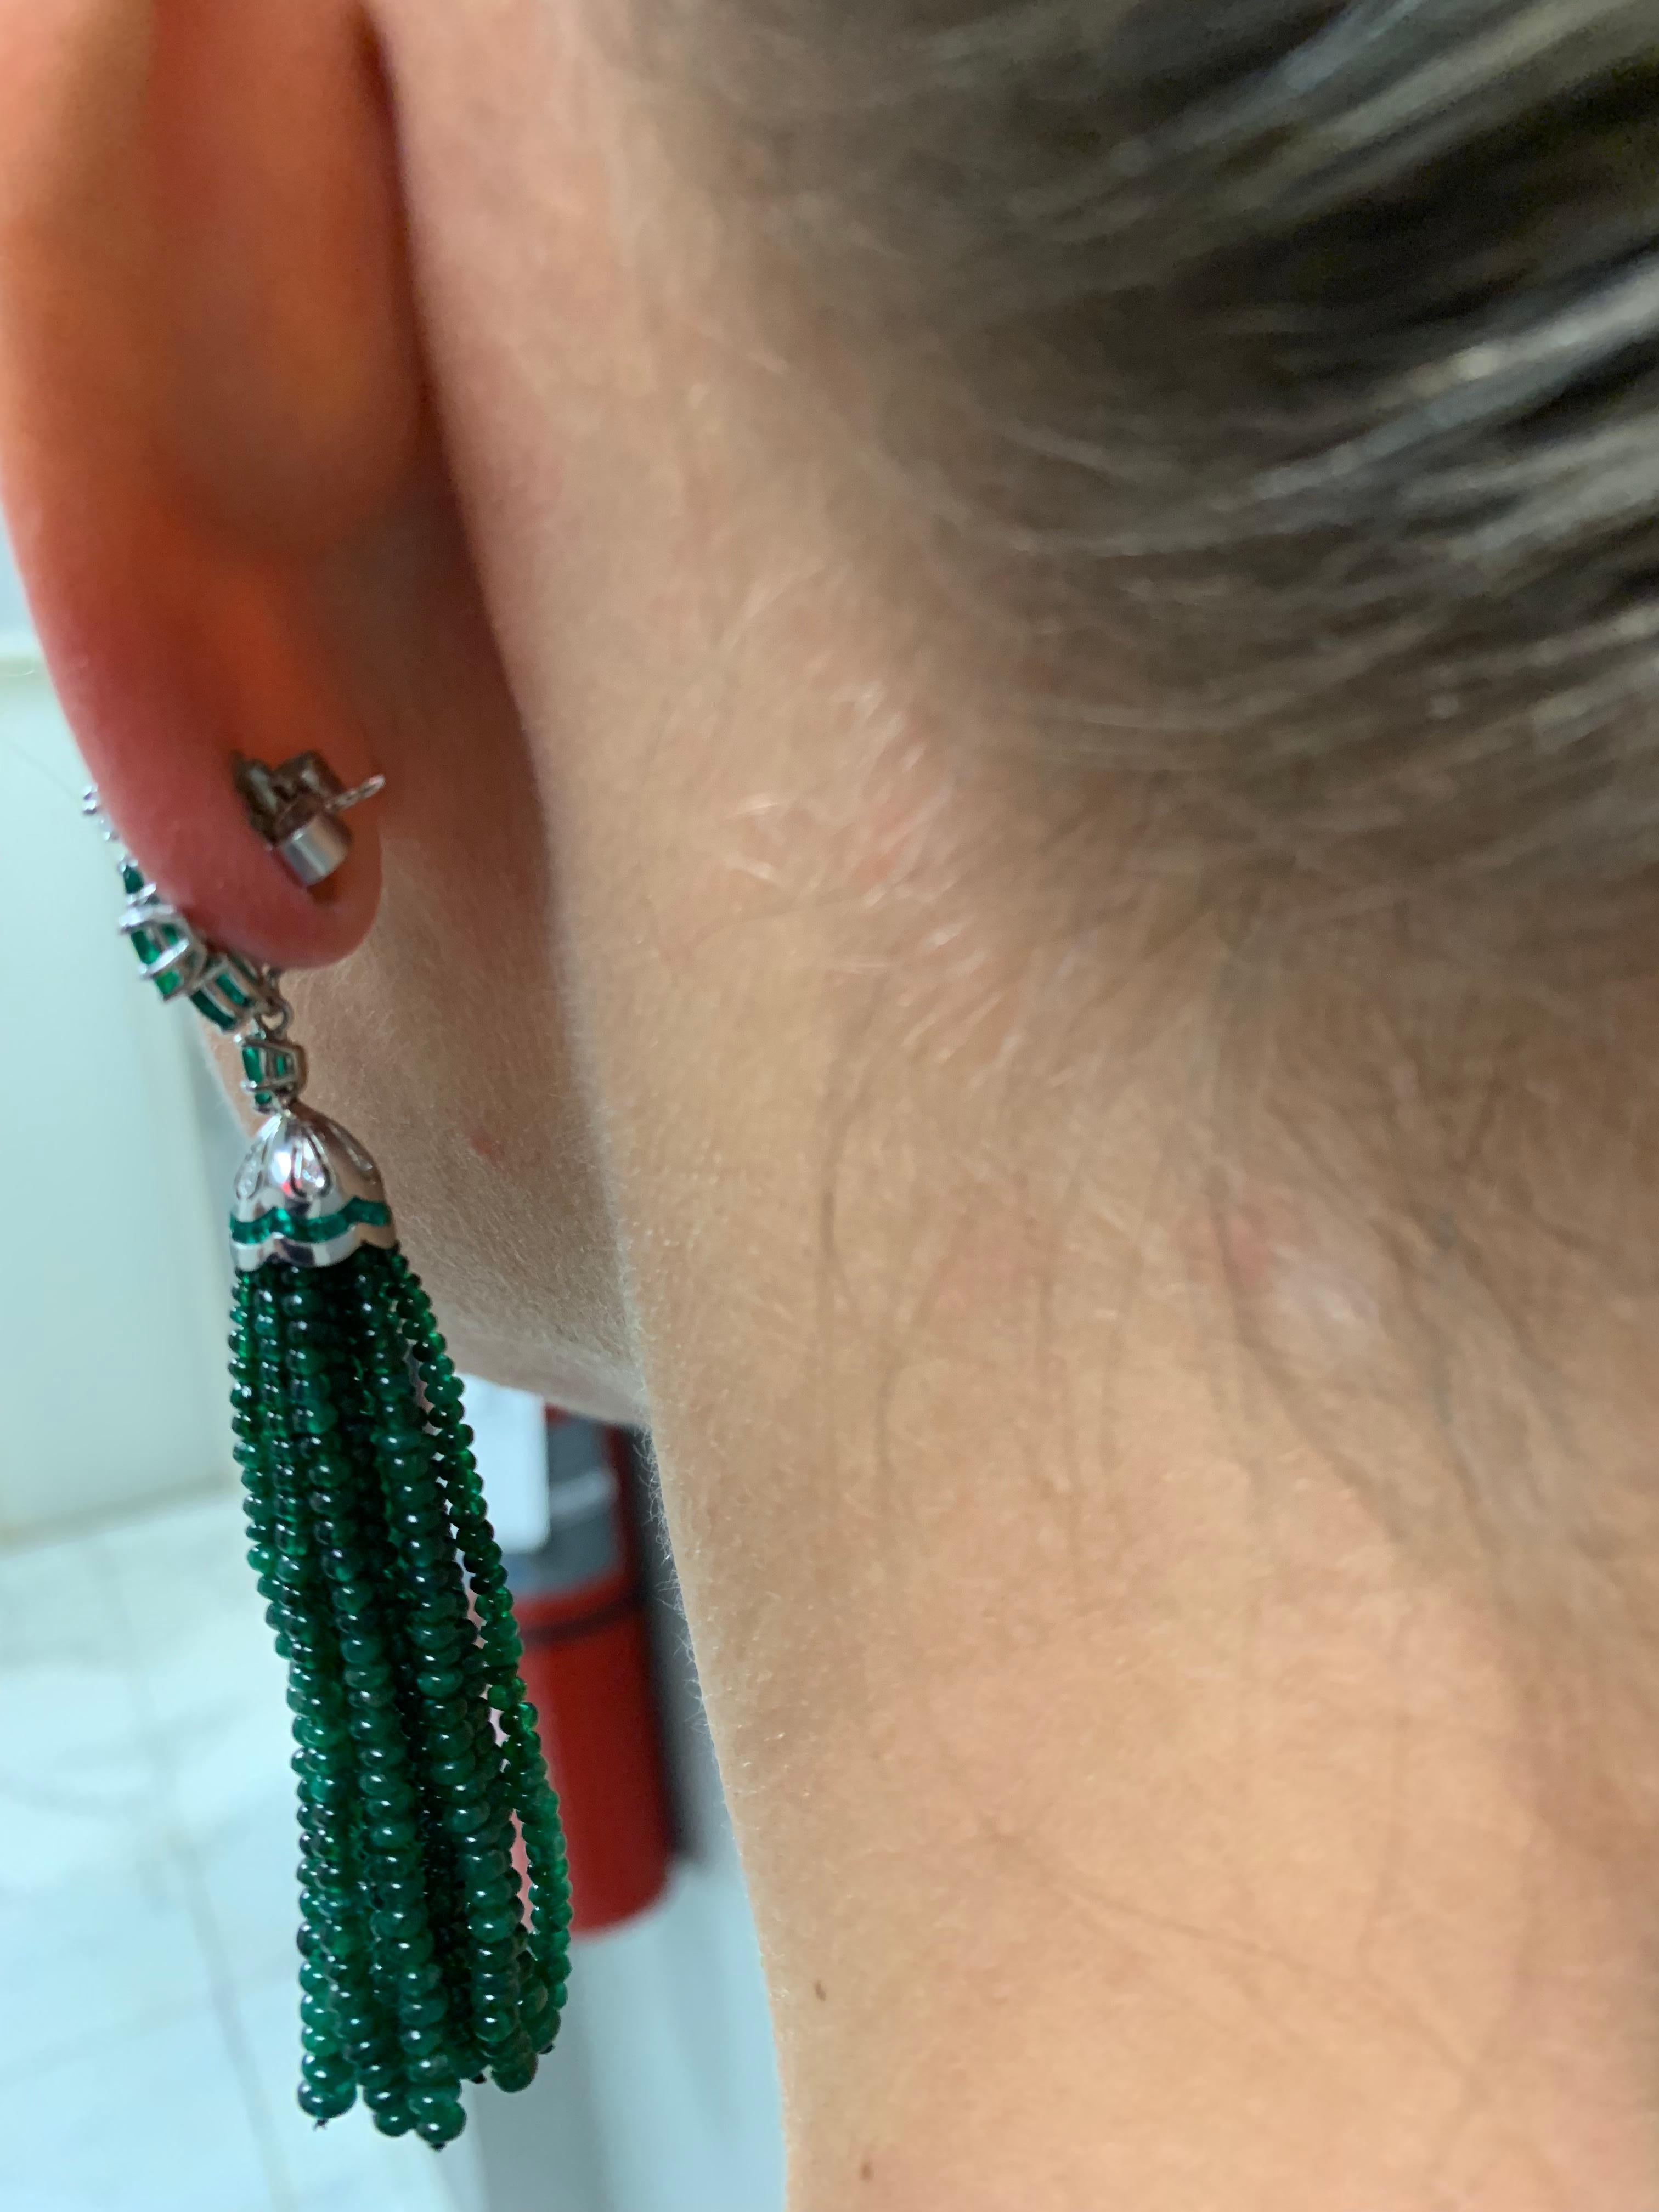 emerald beads earrings